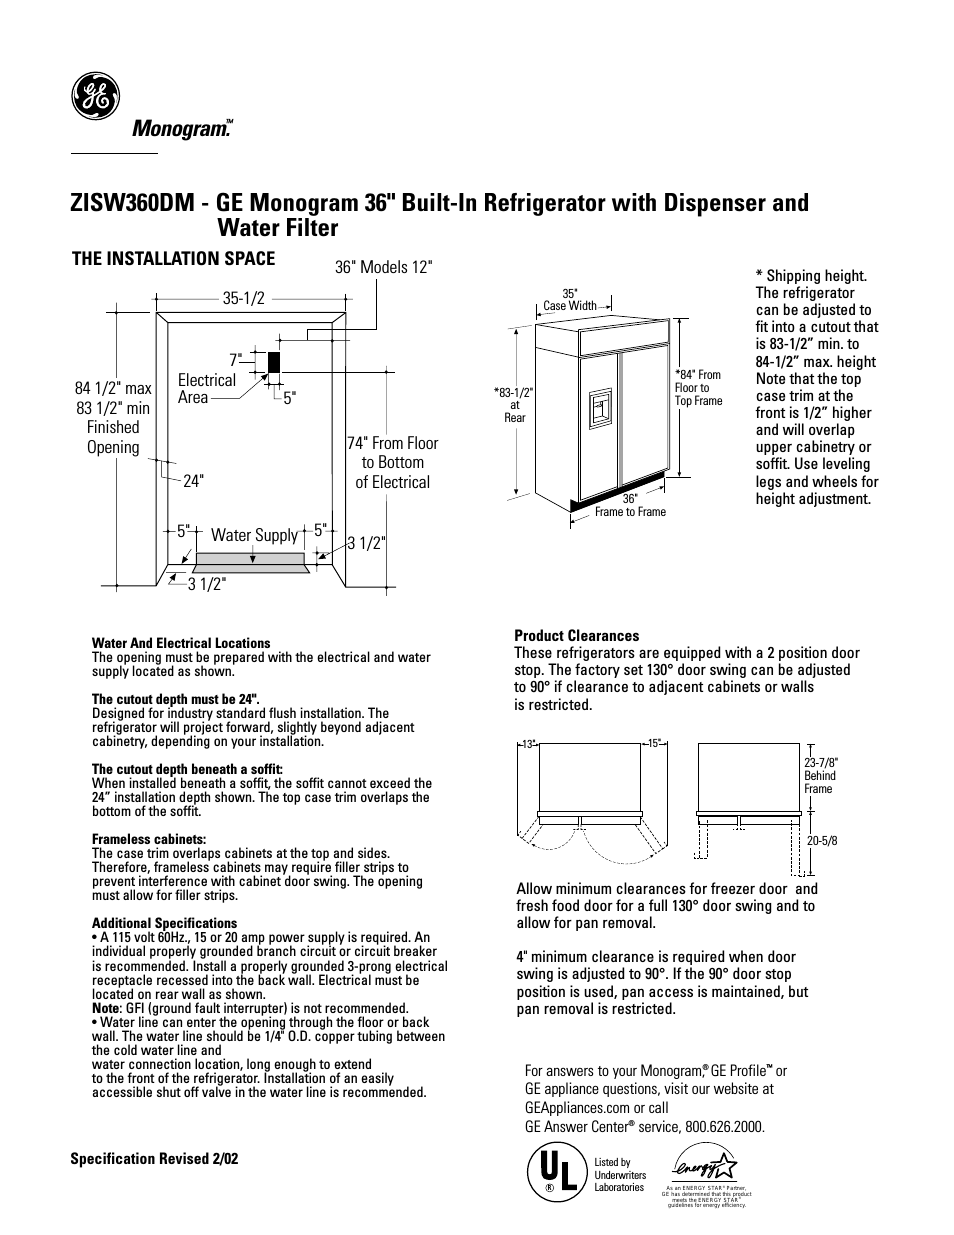 ZISW360DM (Page 1)